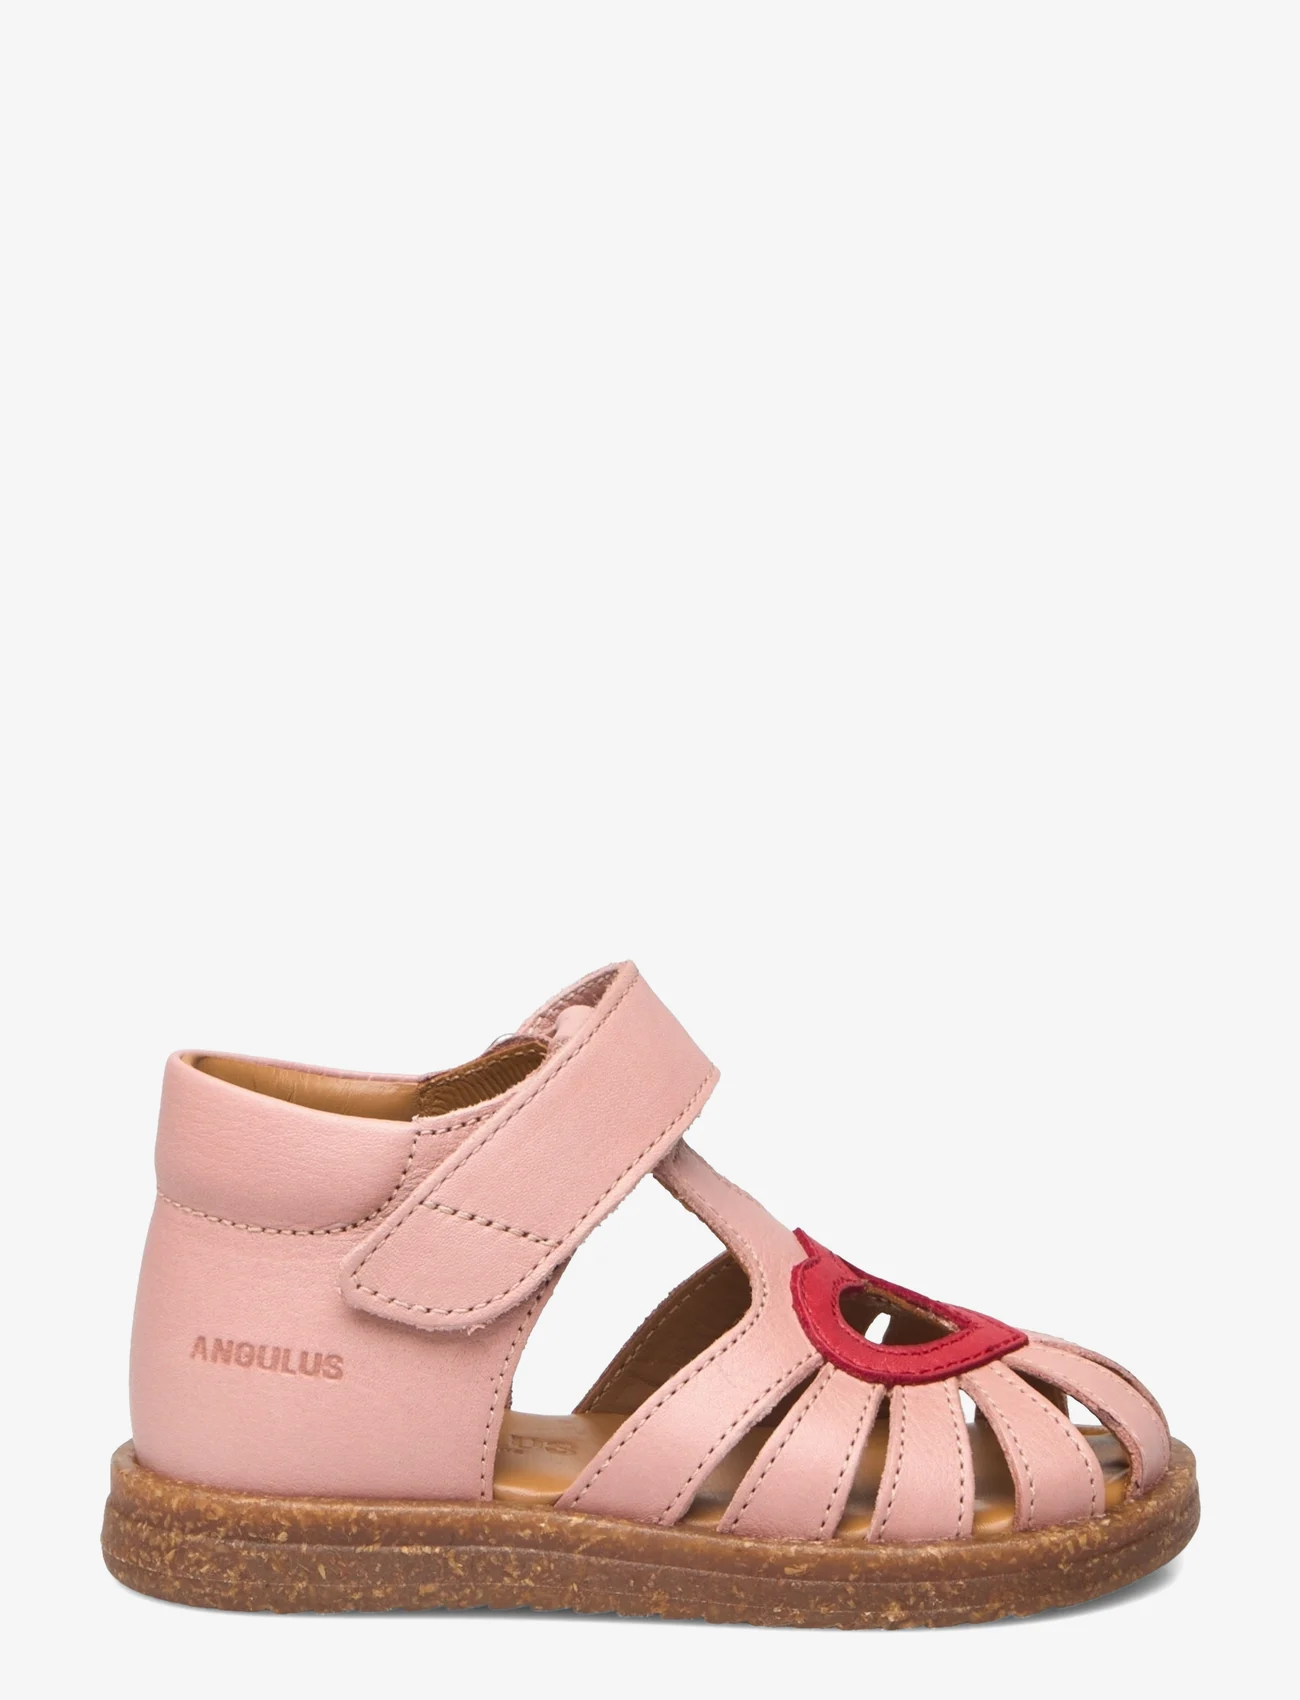 ANGULUS - Sandals - flat - closed toe - - sandals - 1730/1731 rose/red - 1